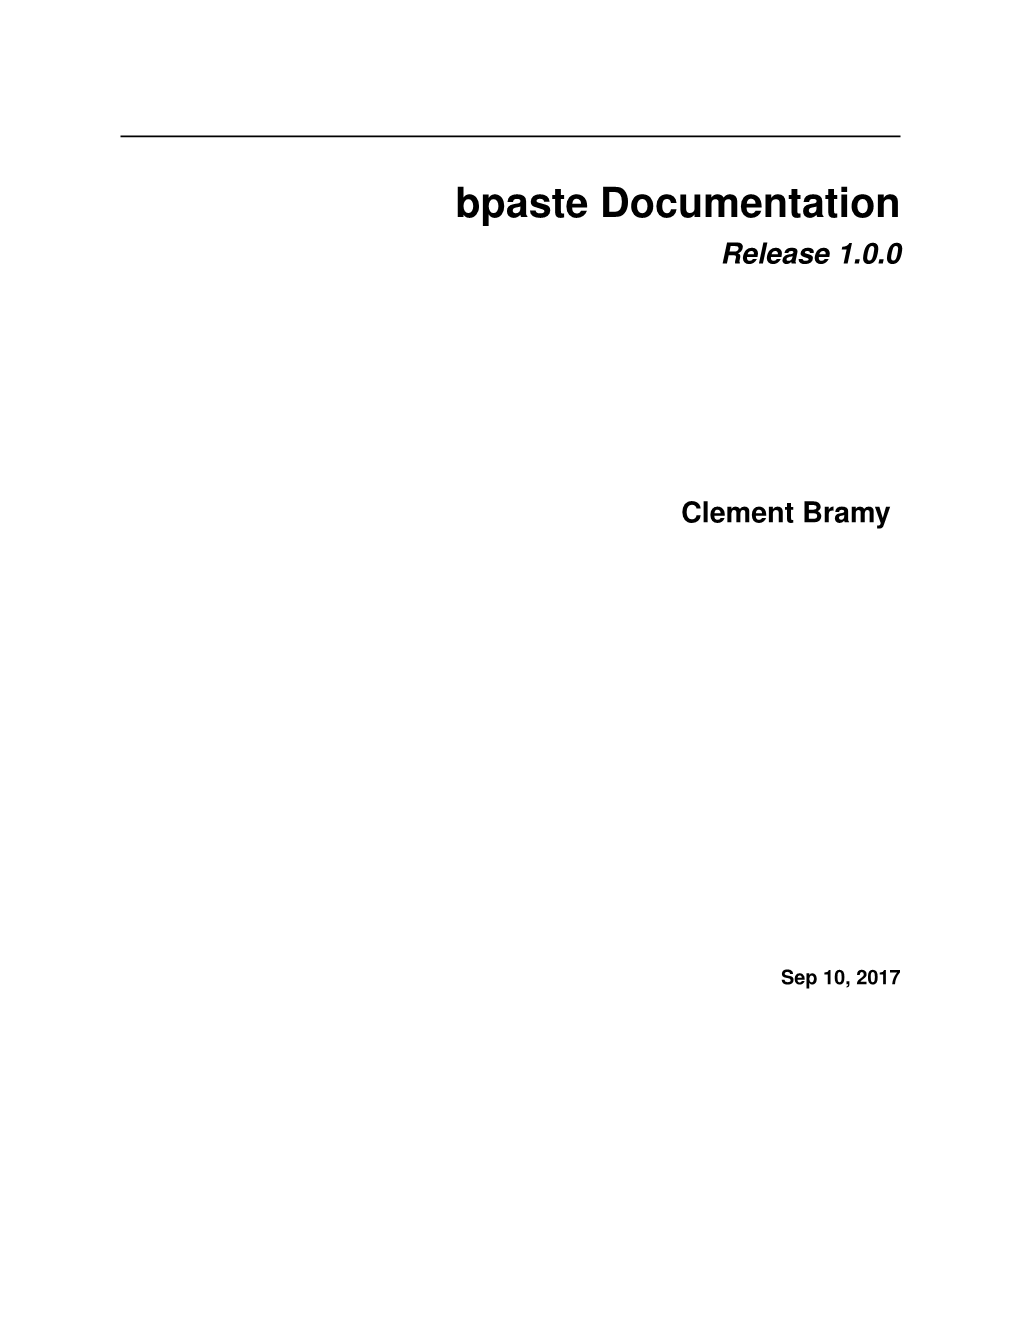 Bpaste Documentation Release 1.0.0